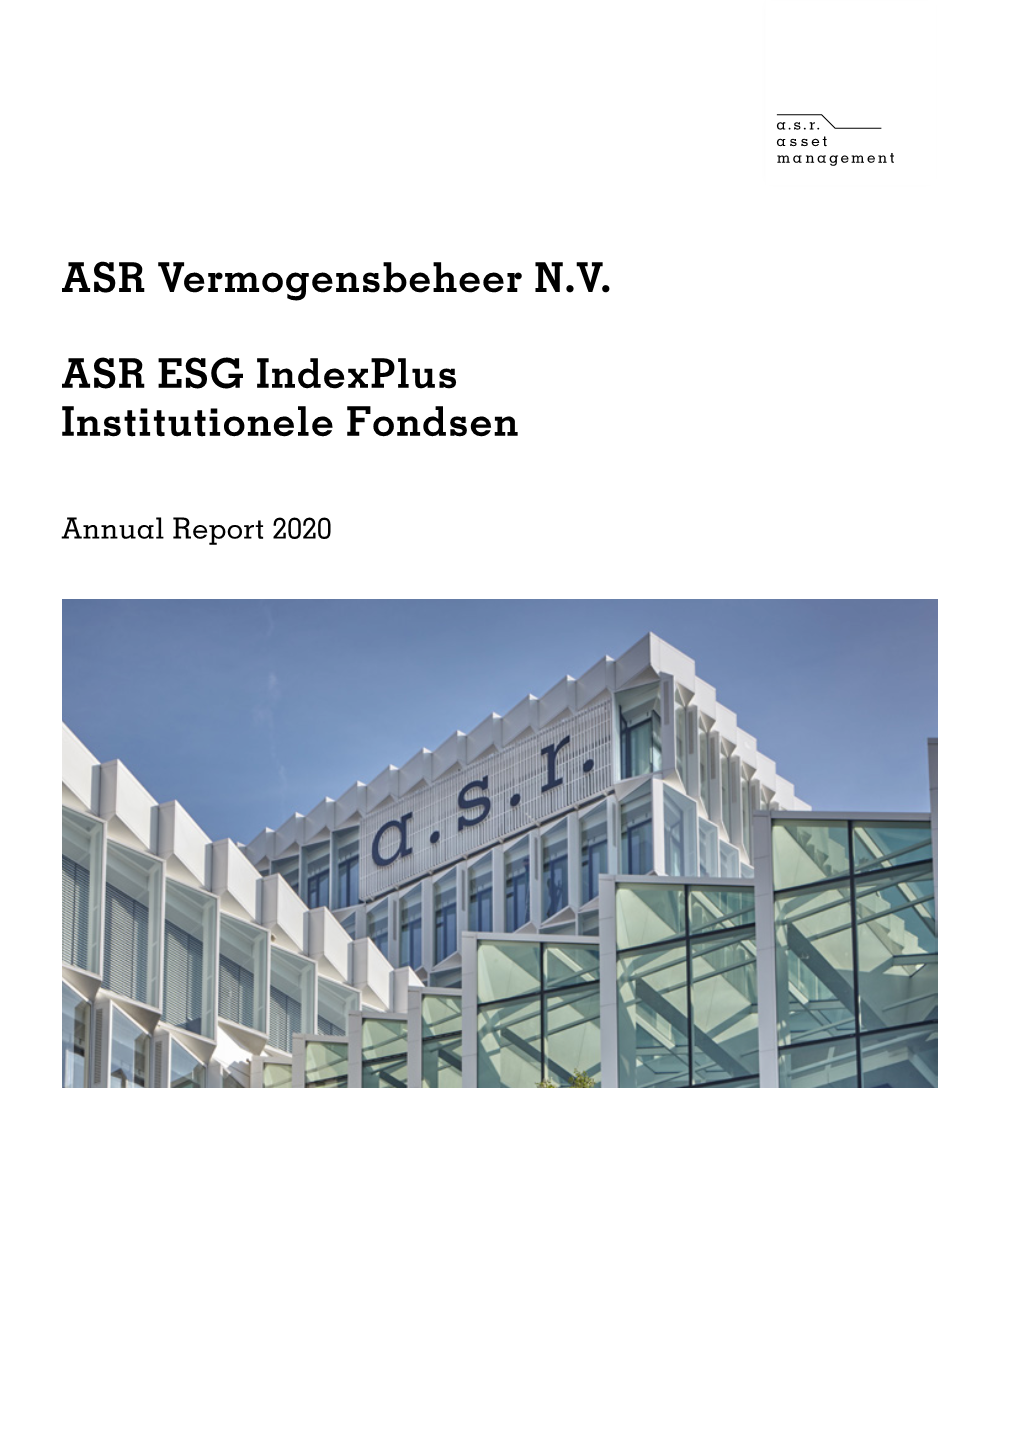 ASR Vermogensbeheer N.V. ASR ESG Indexplus Institutionele Fondsen